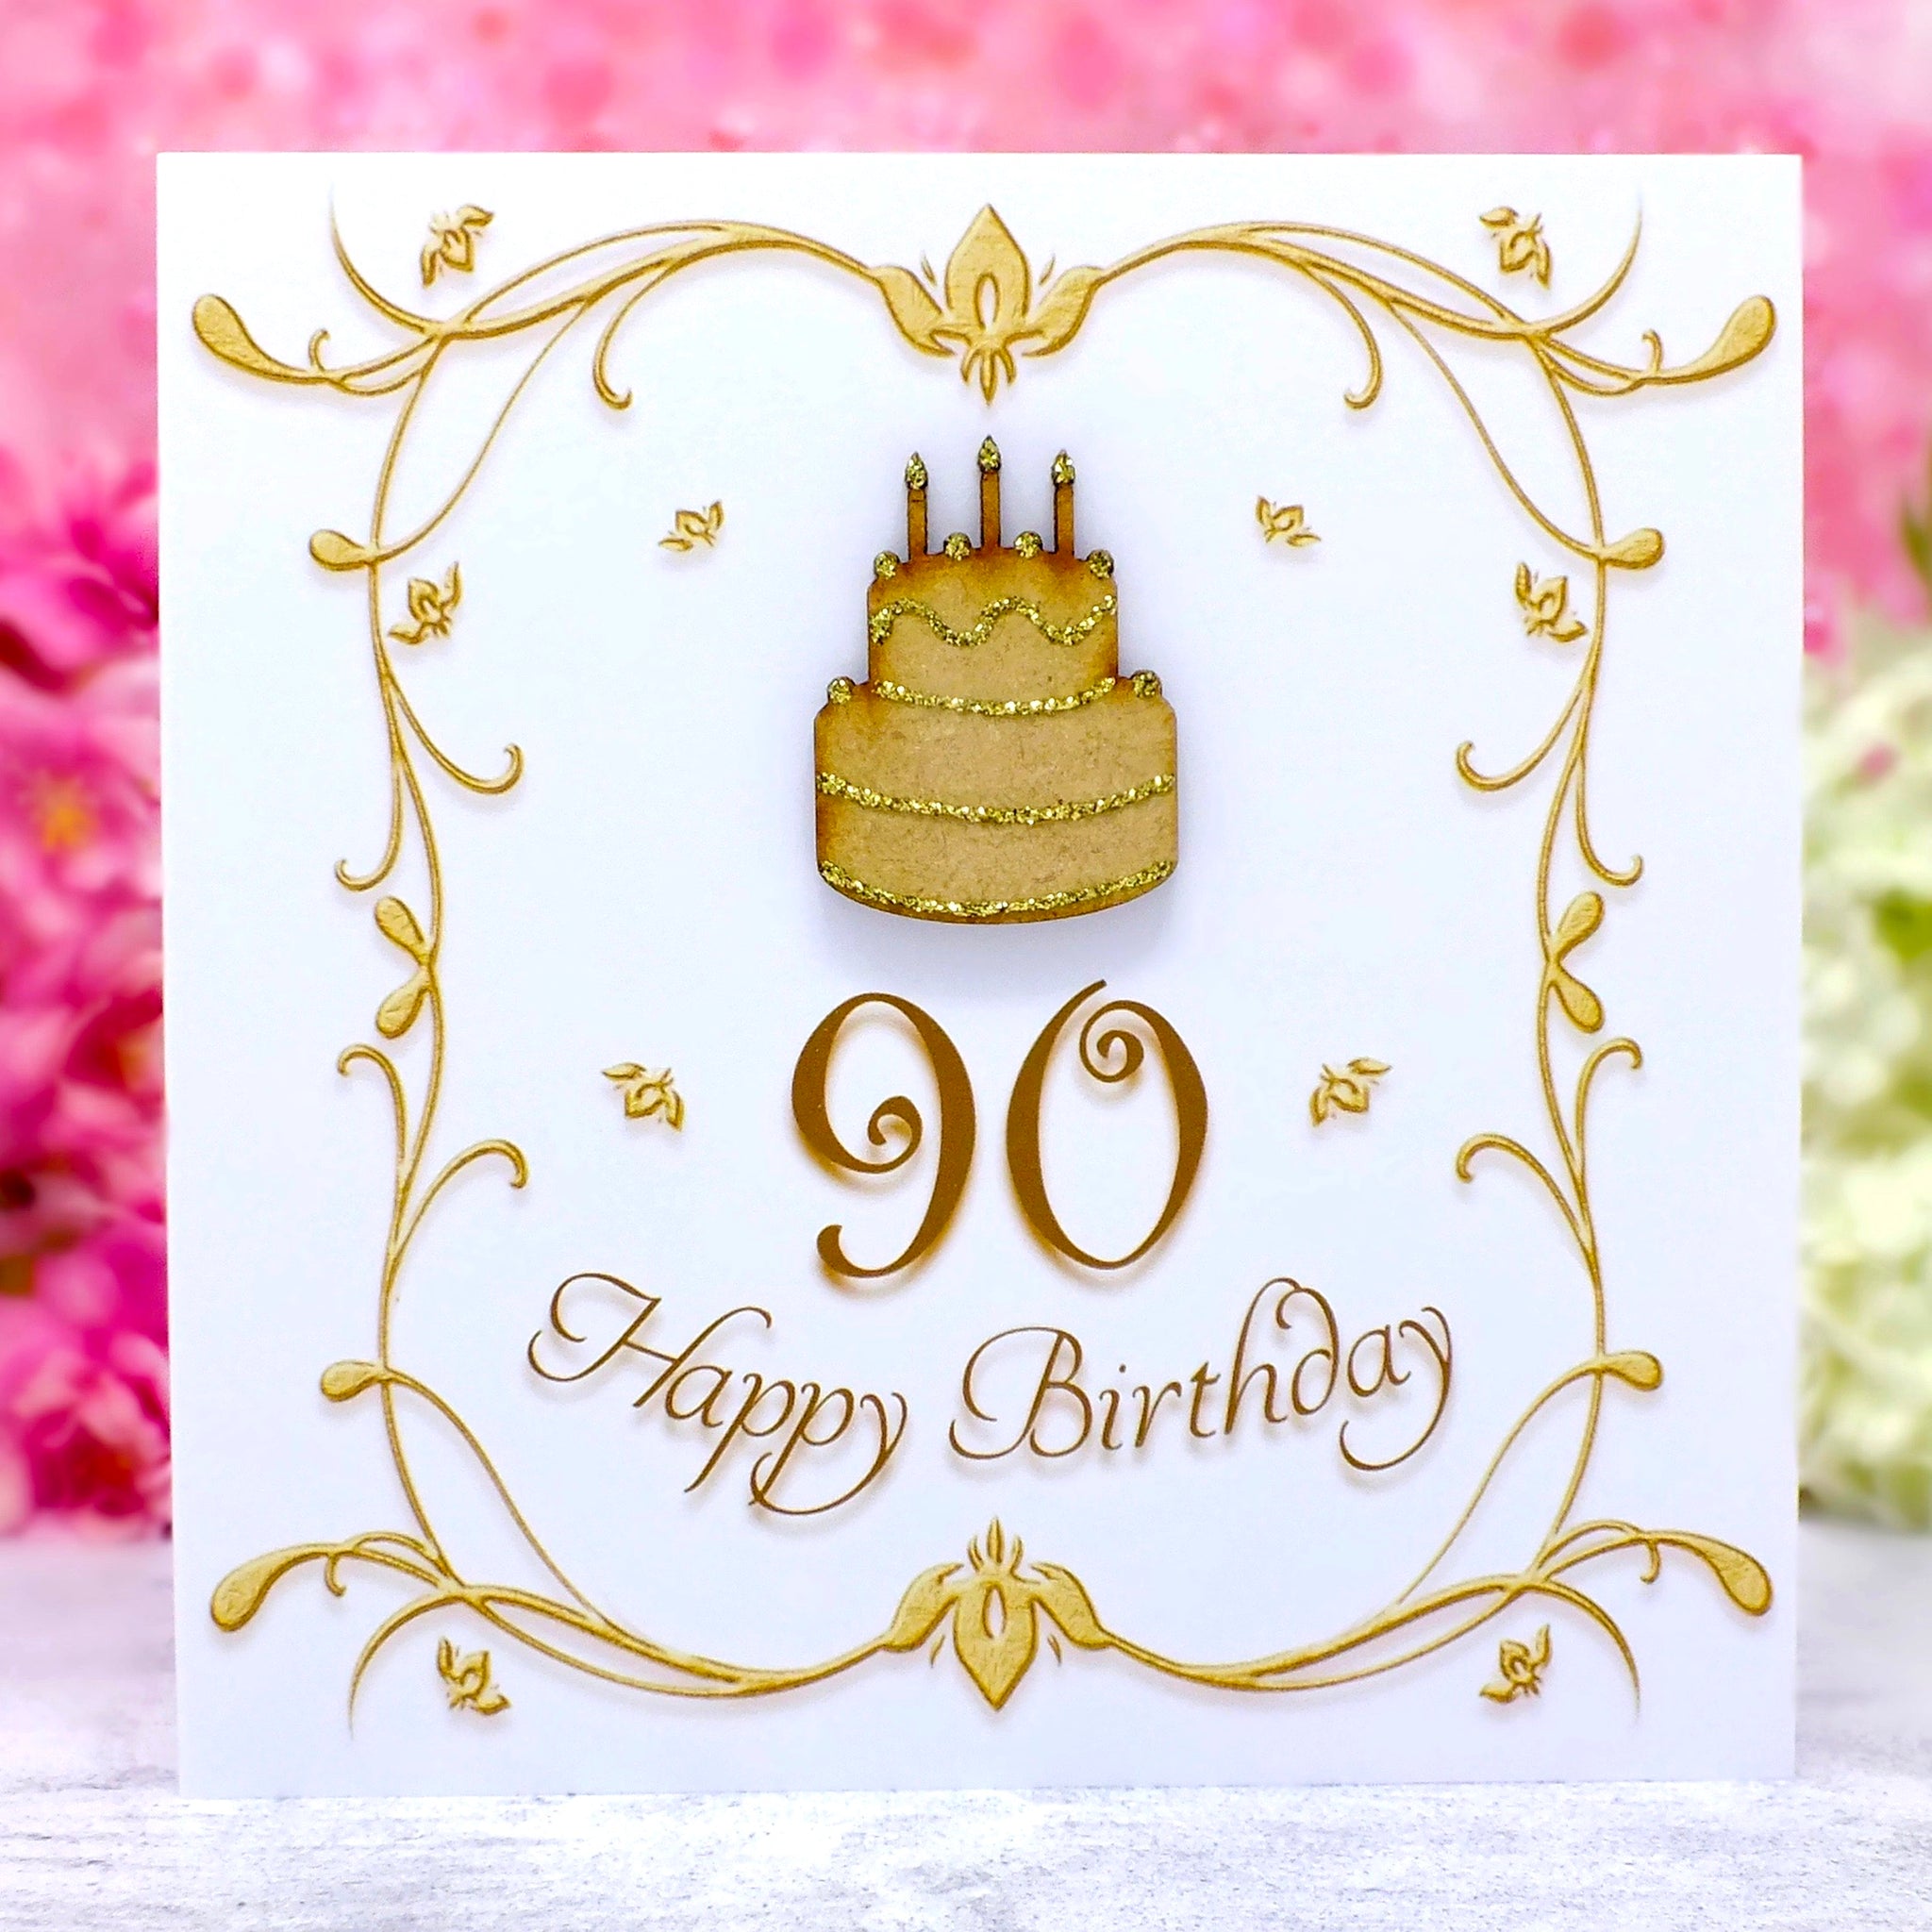 90th Birthday Card - Wooden Birthday Cake Main